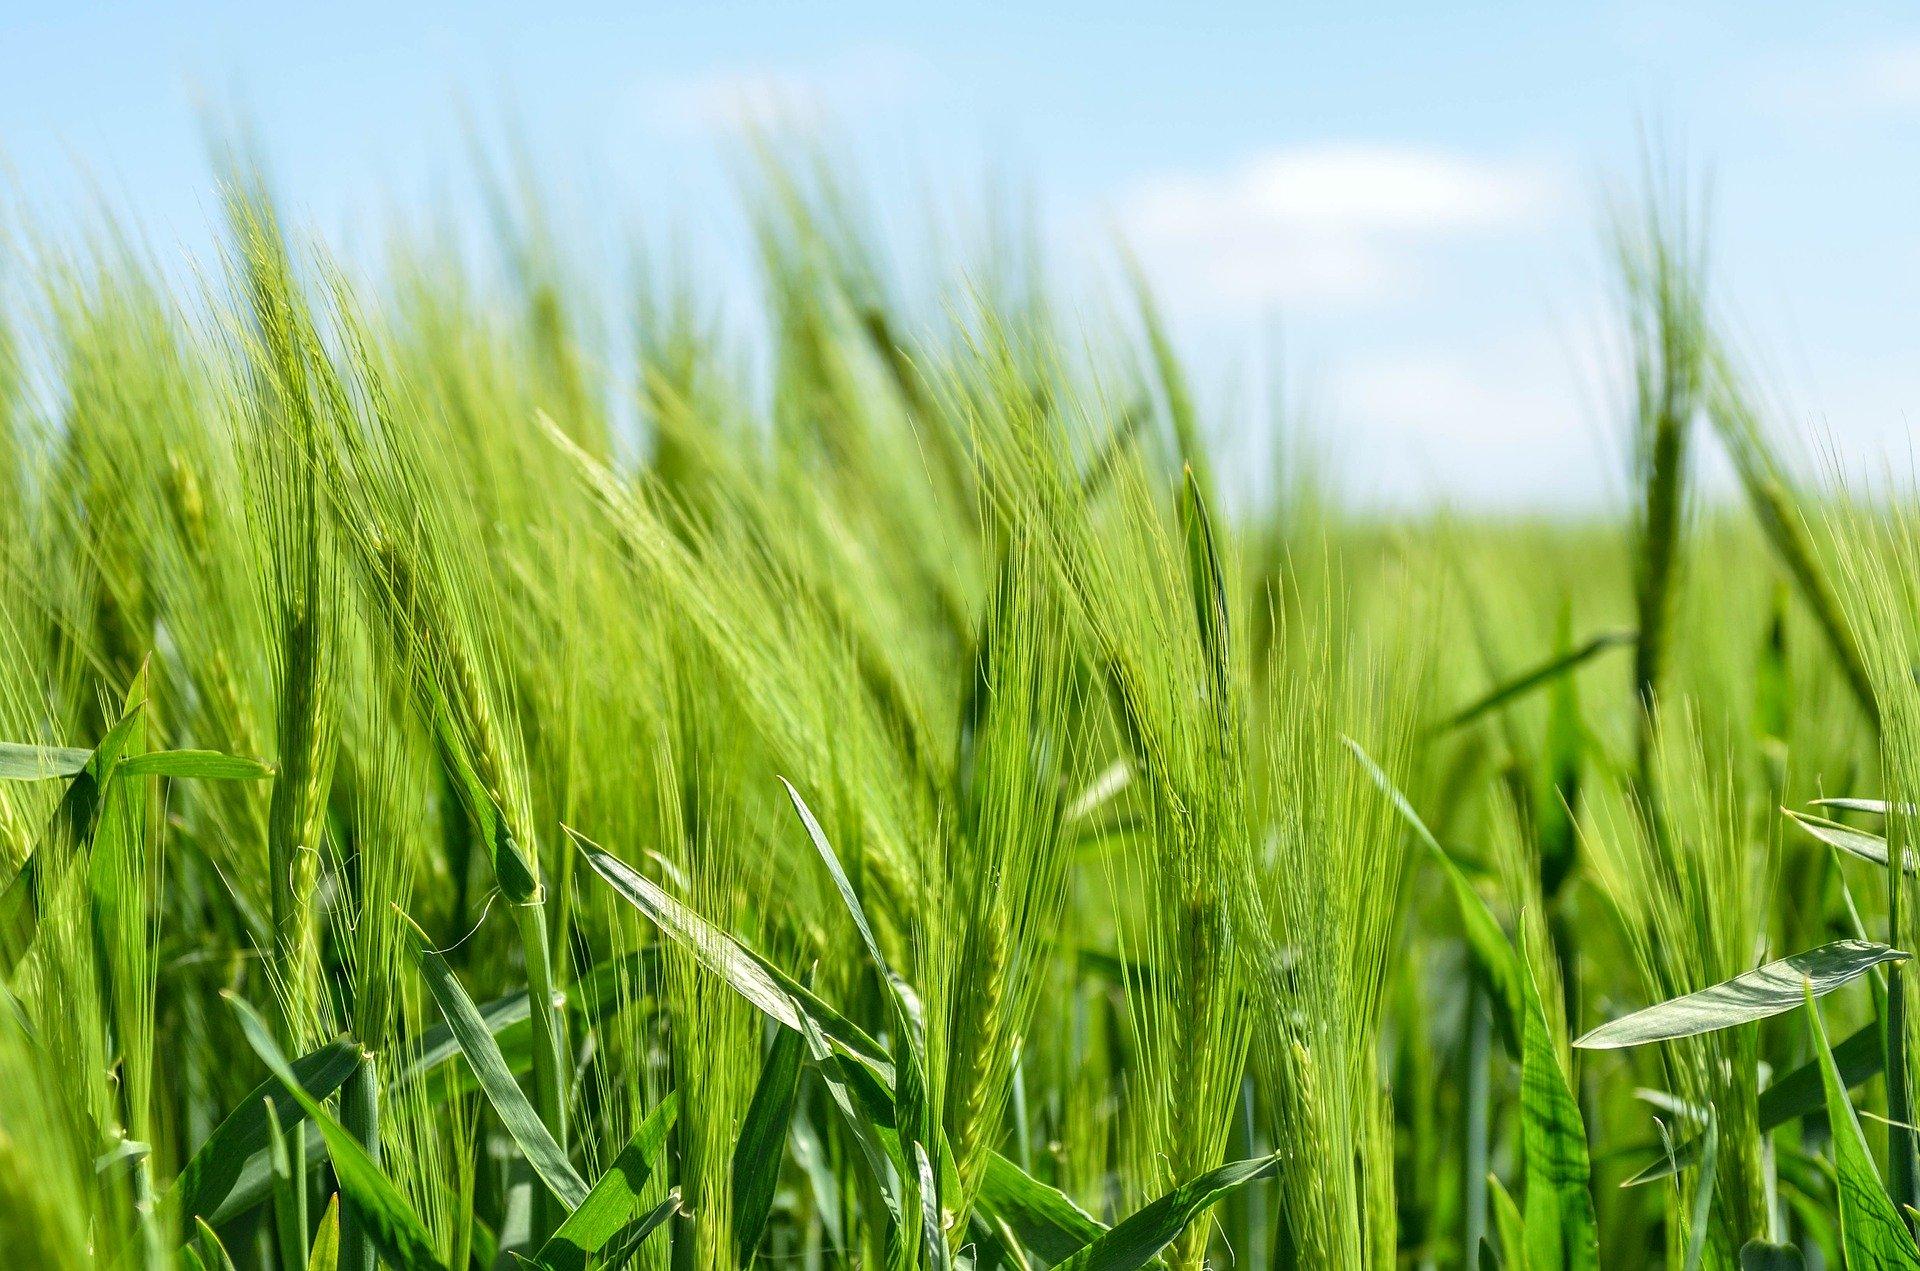 Barley field image